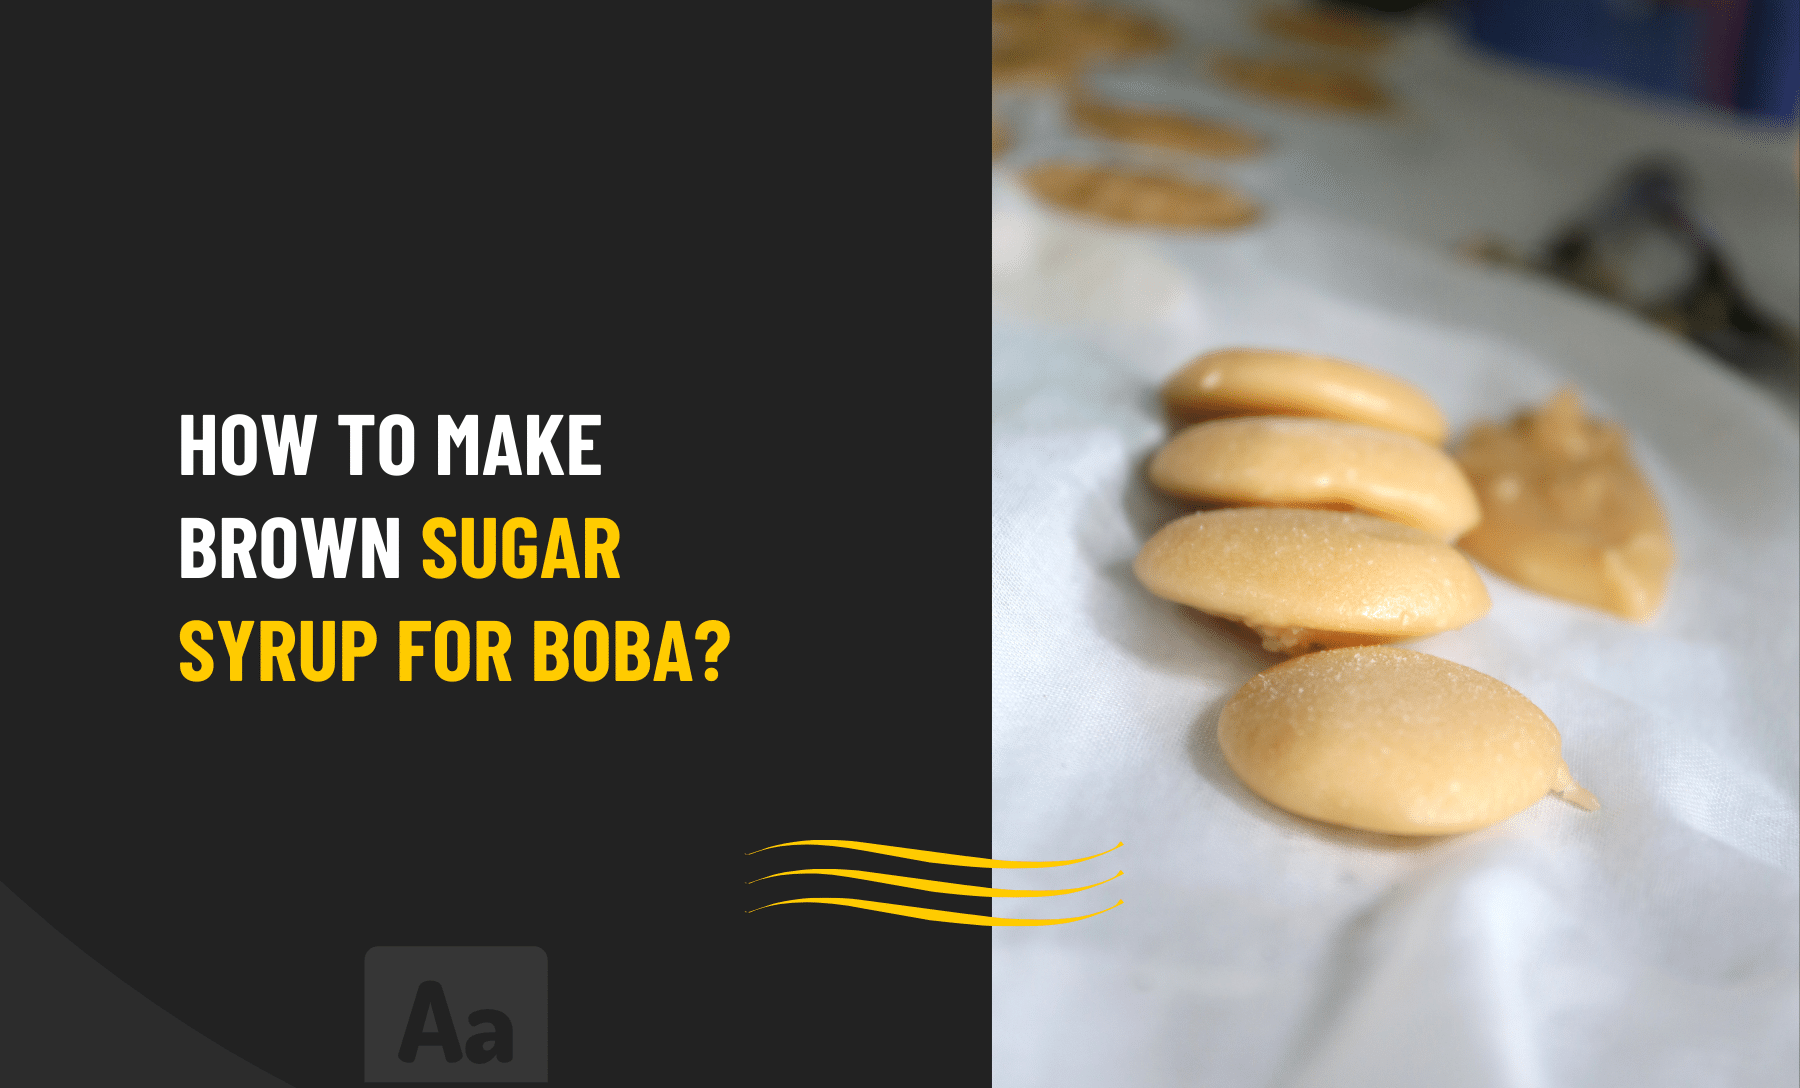 How to make Brown Sugar for Boba